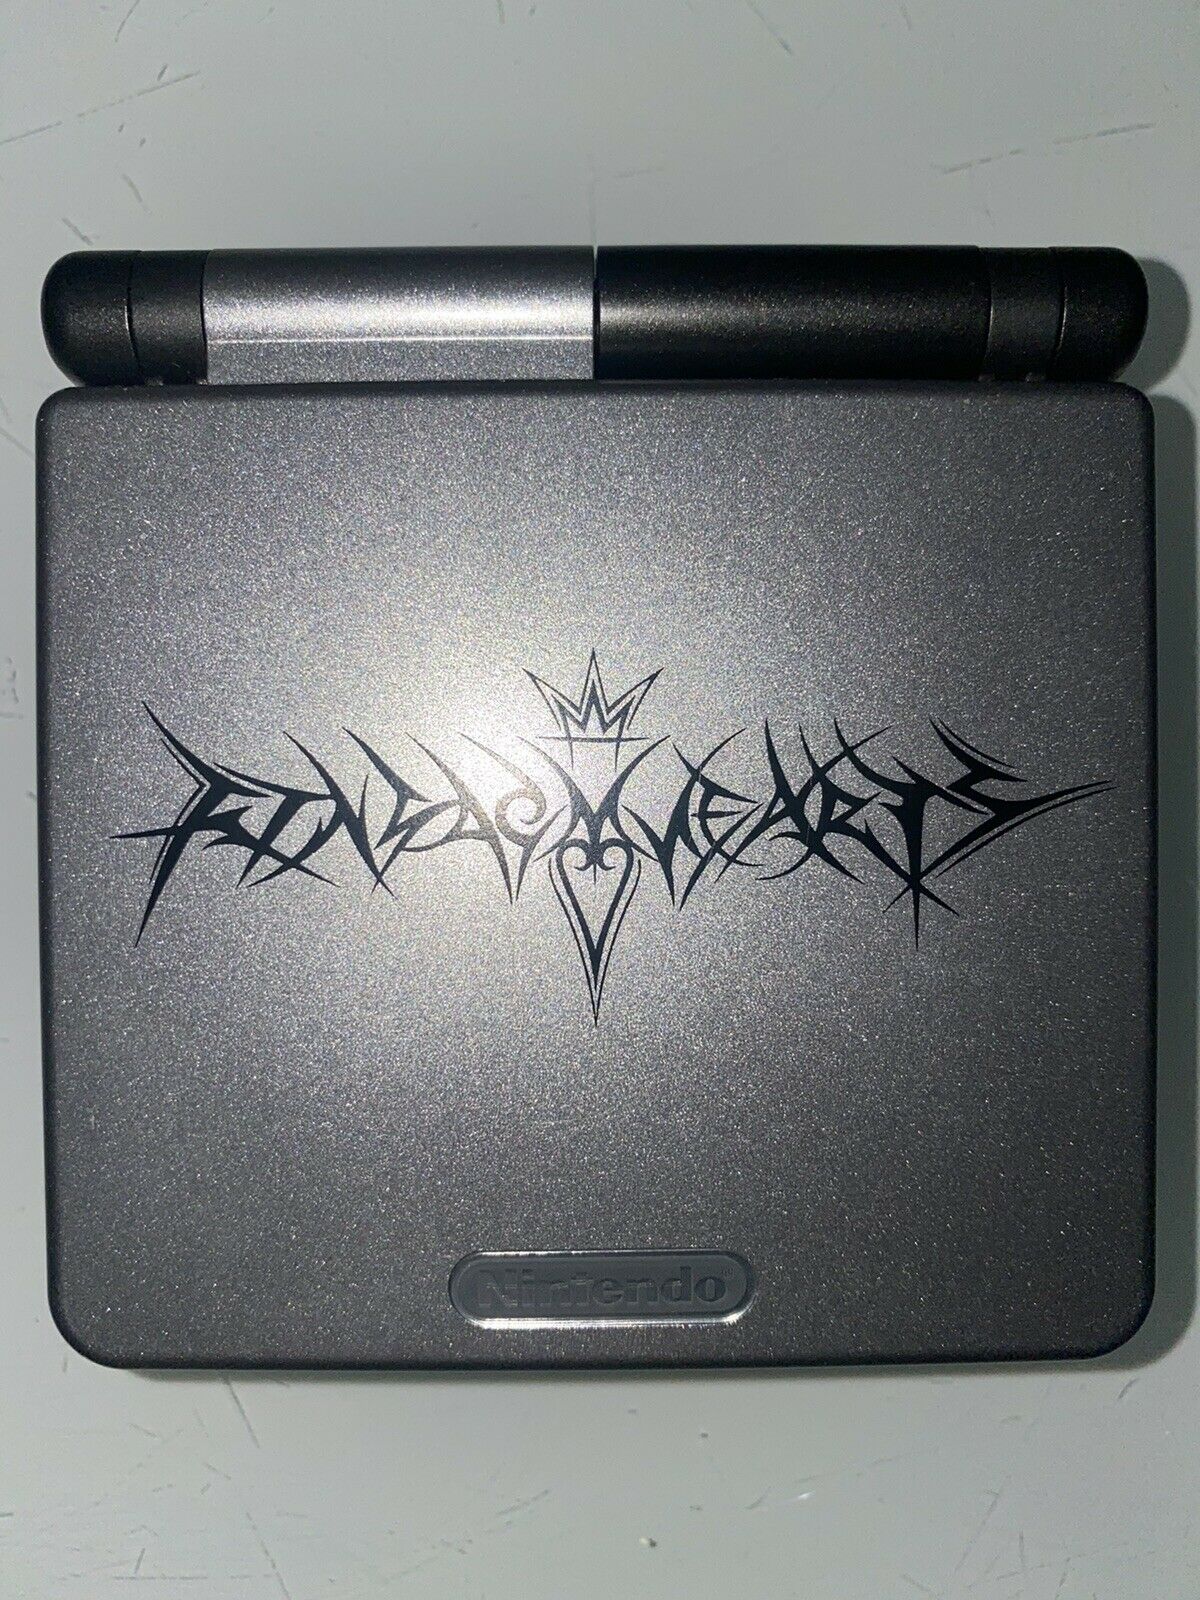 Game Boy Advance SP Kingdom Hearts